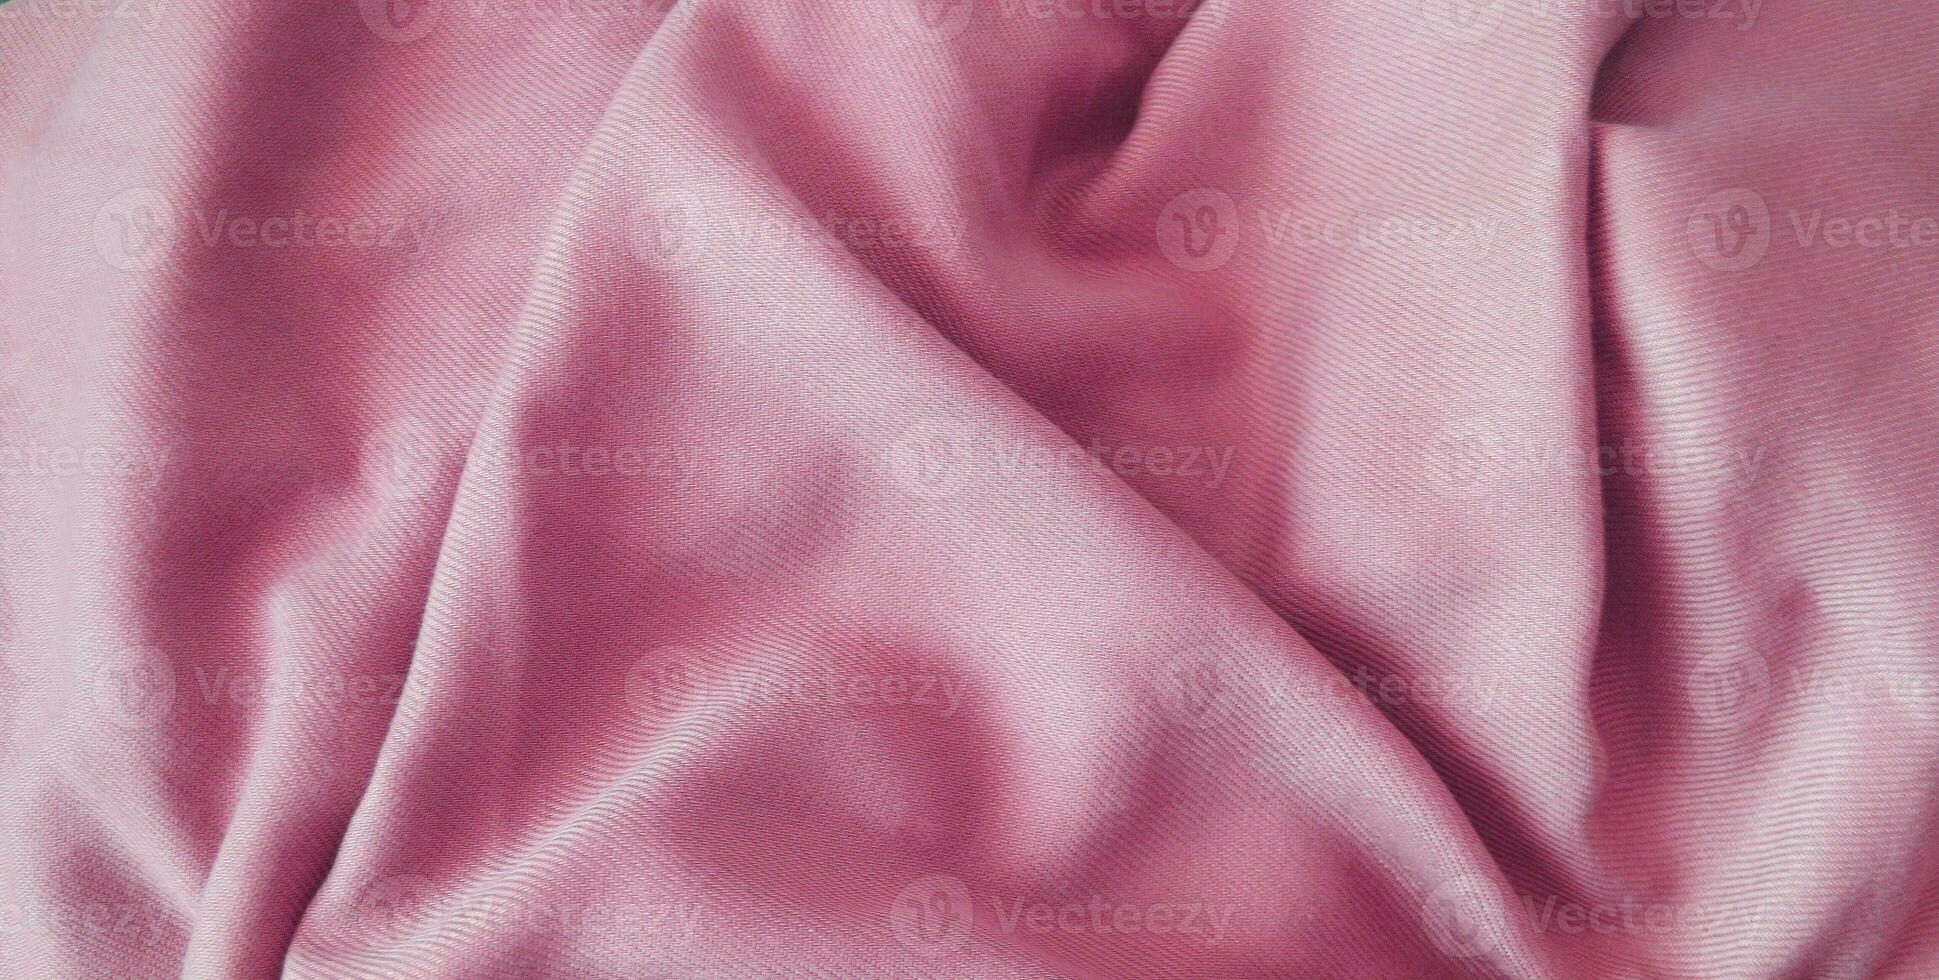 rosa tyg bakgrund, silke tyg, satin textil- textur, abstrakt bakgrund, lyx bakgrund foto